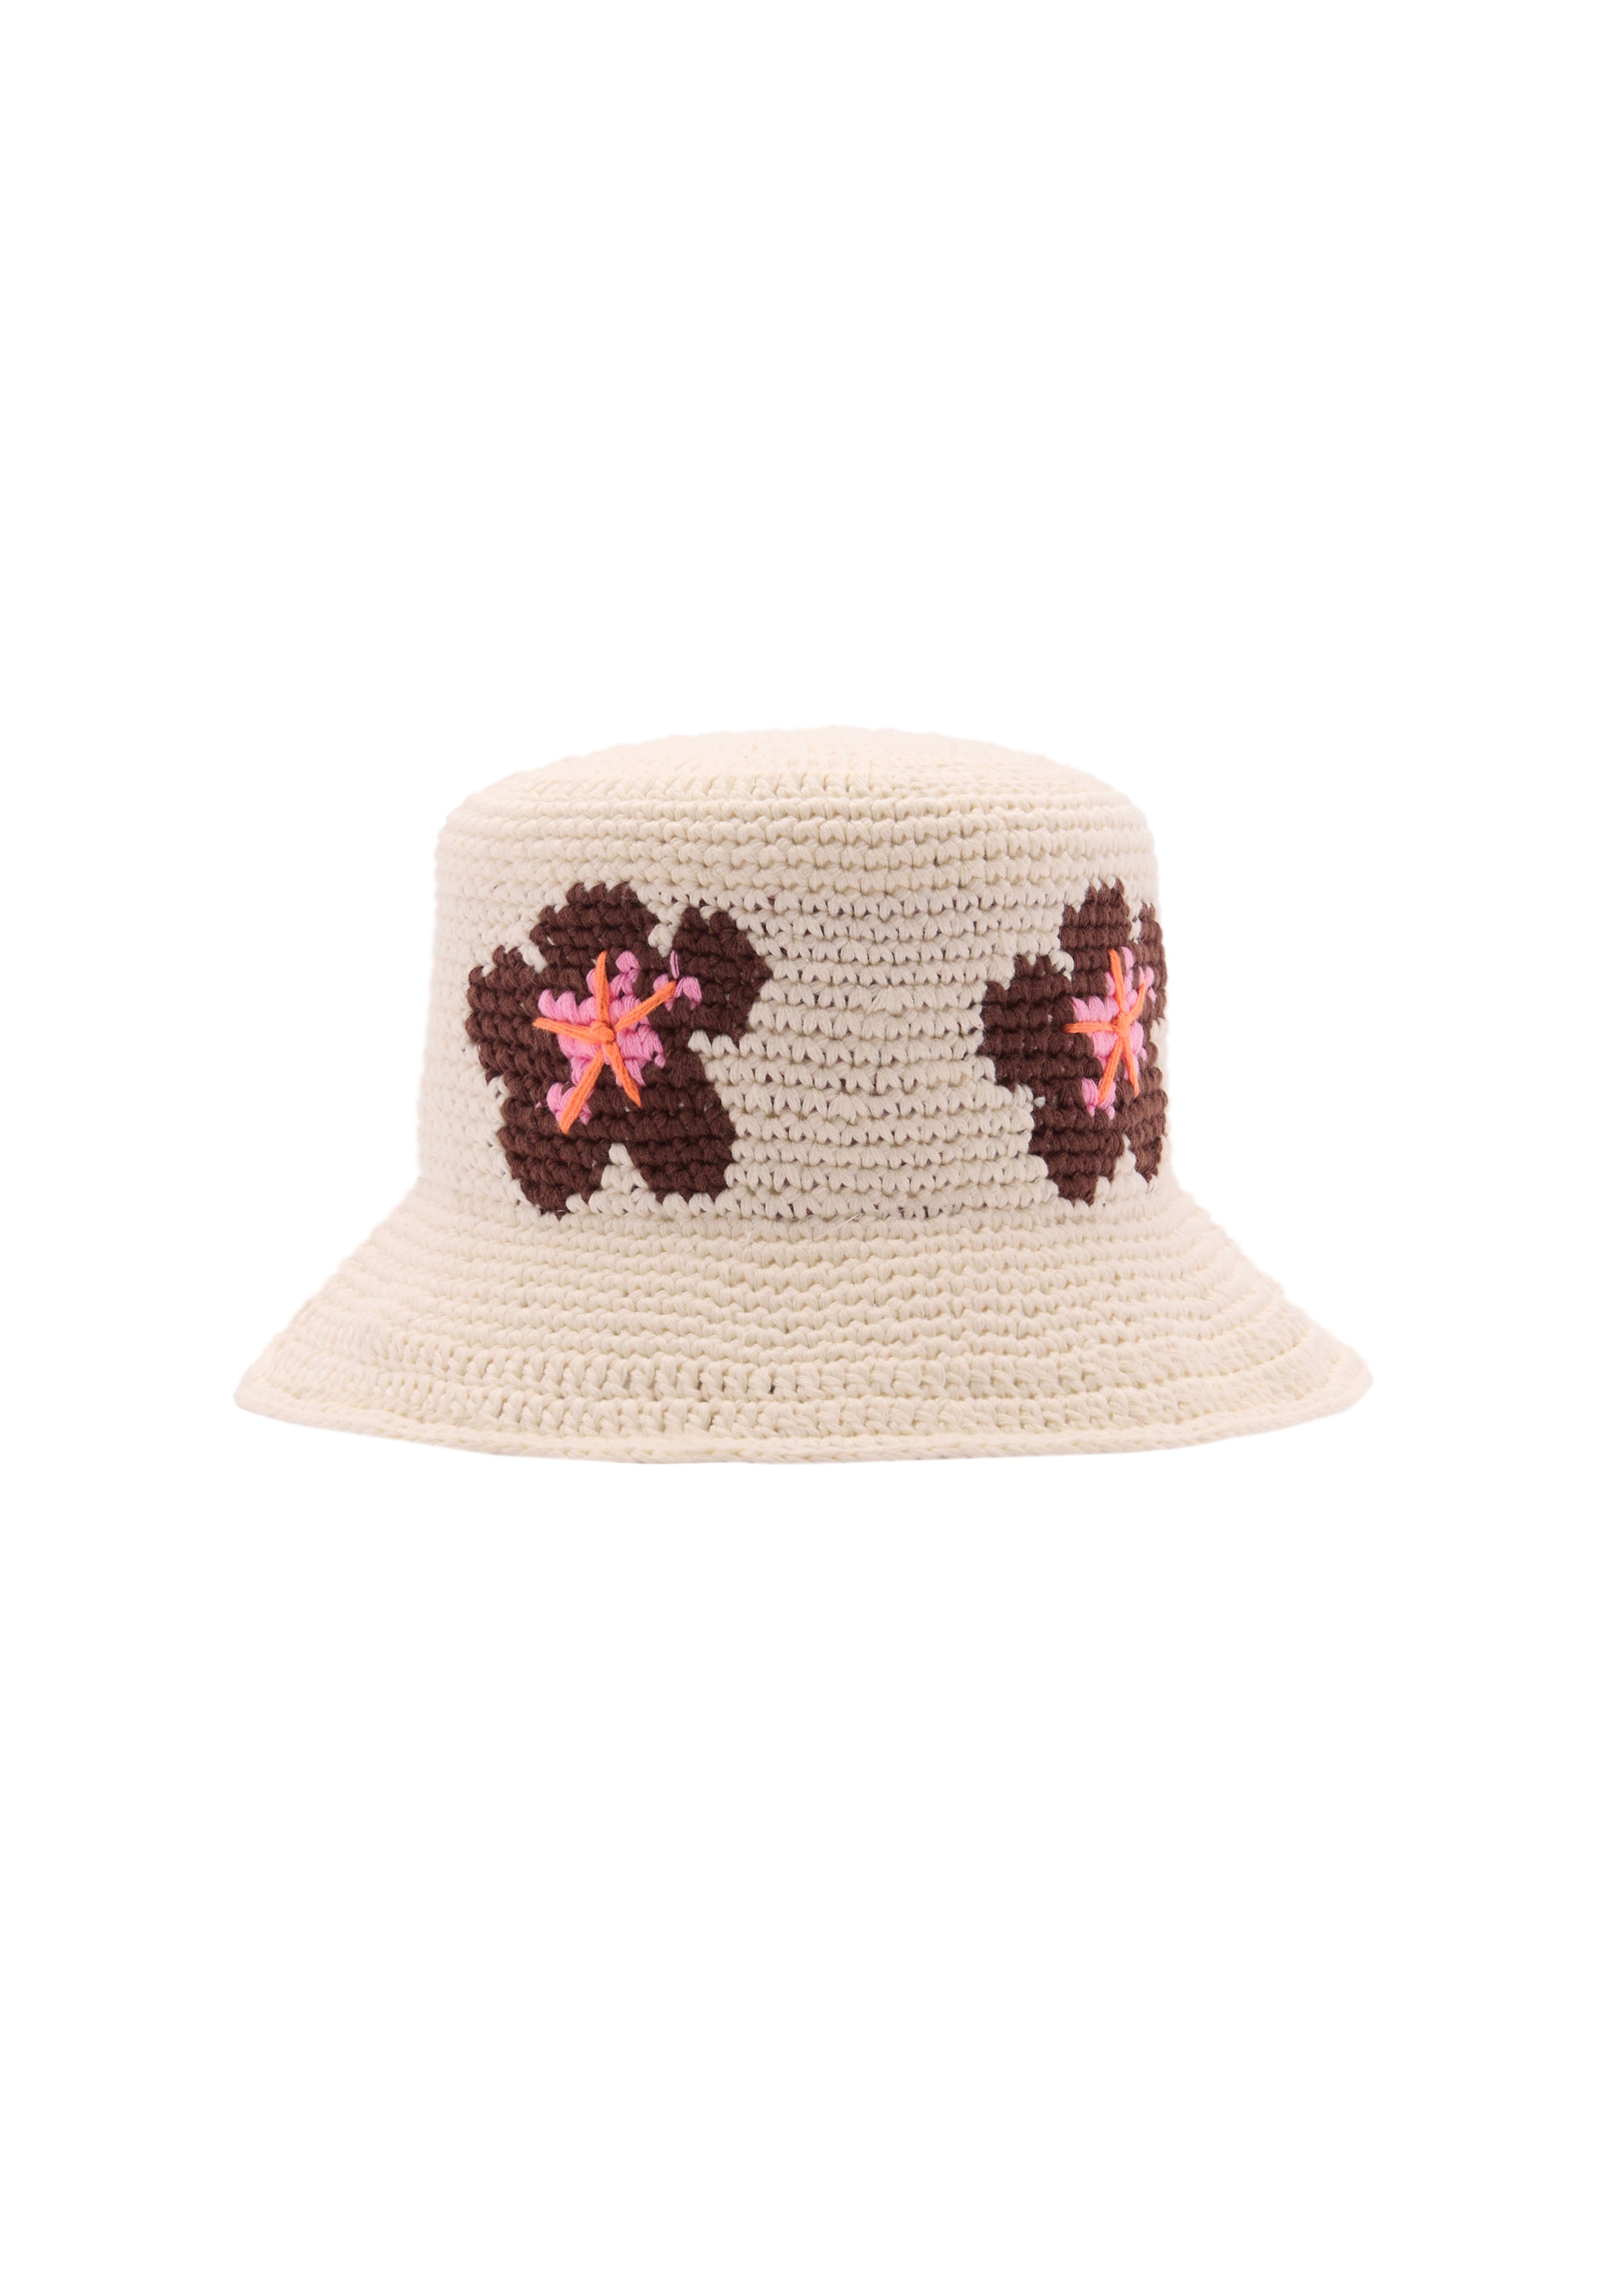 Sombrero de crochet con flores, de  SIEDRÉS X MANGO.